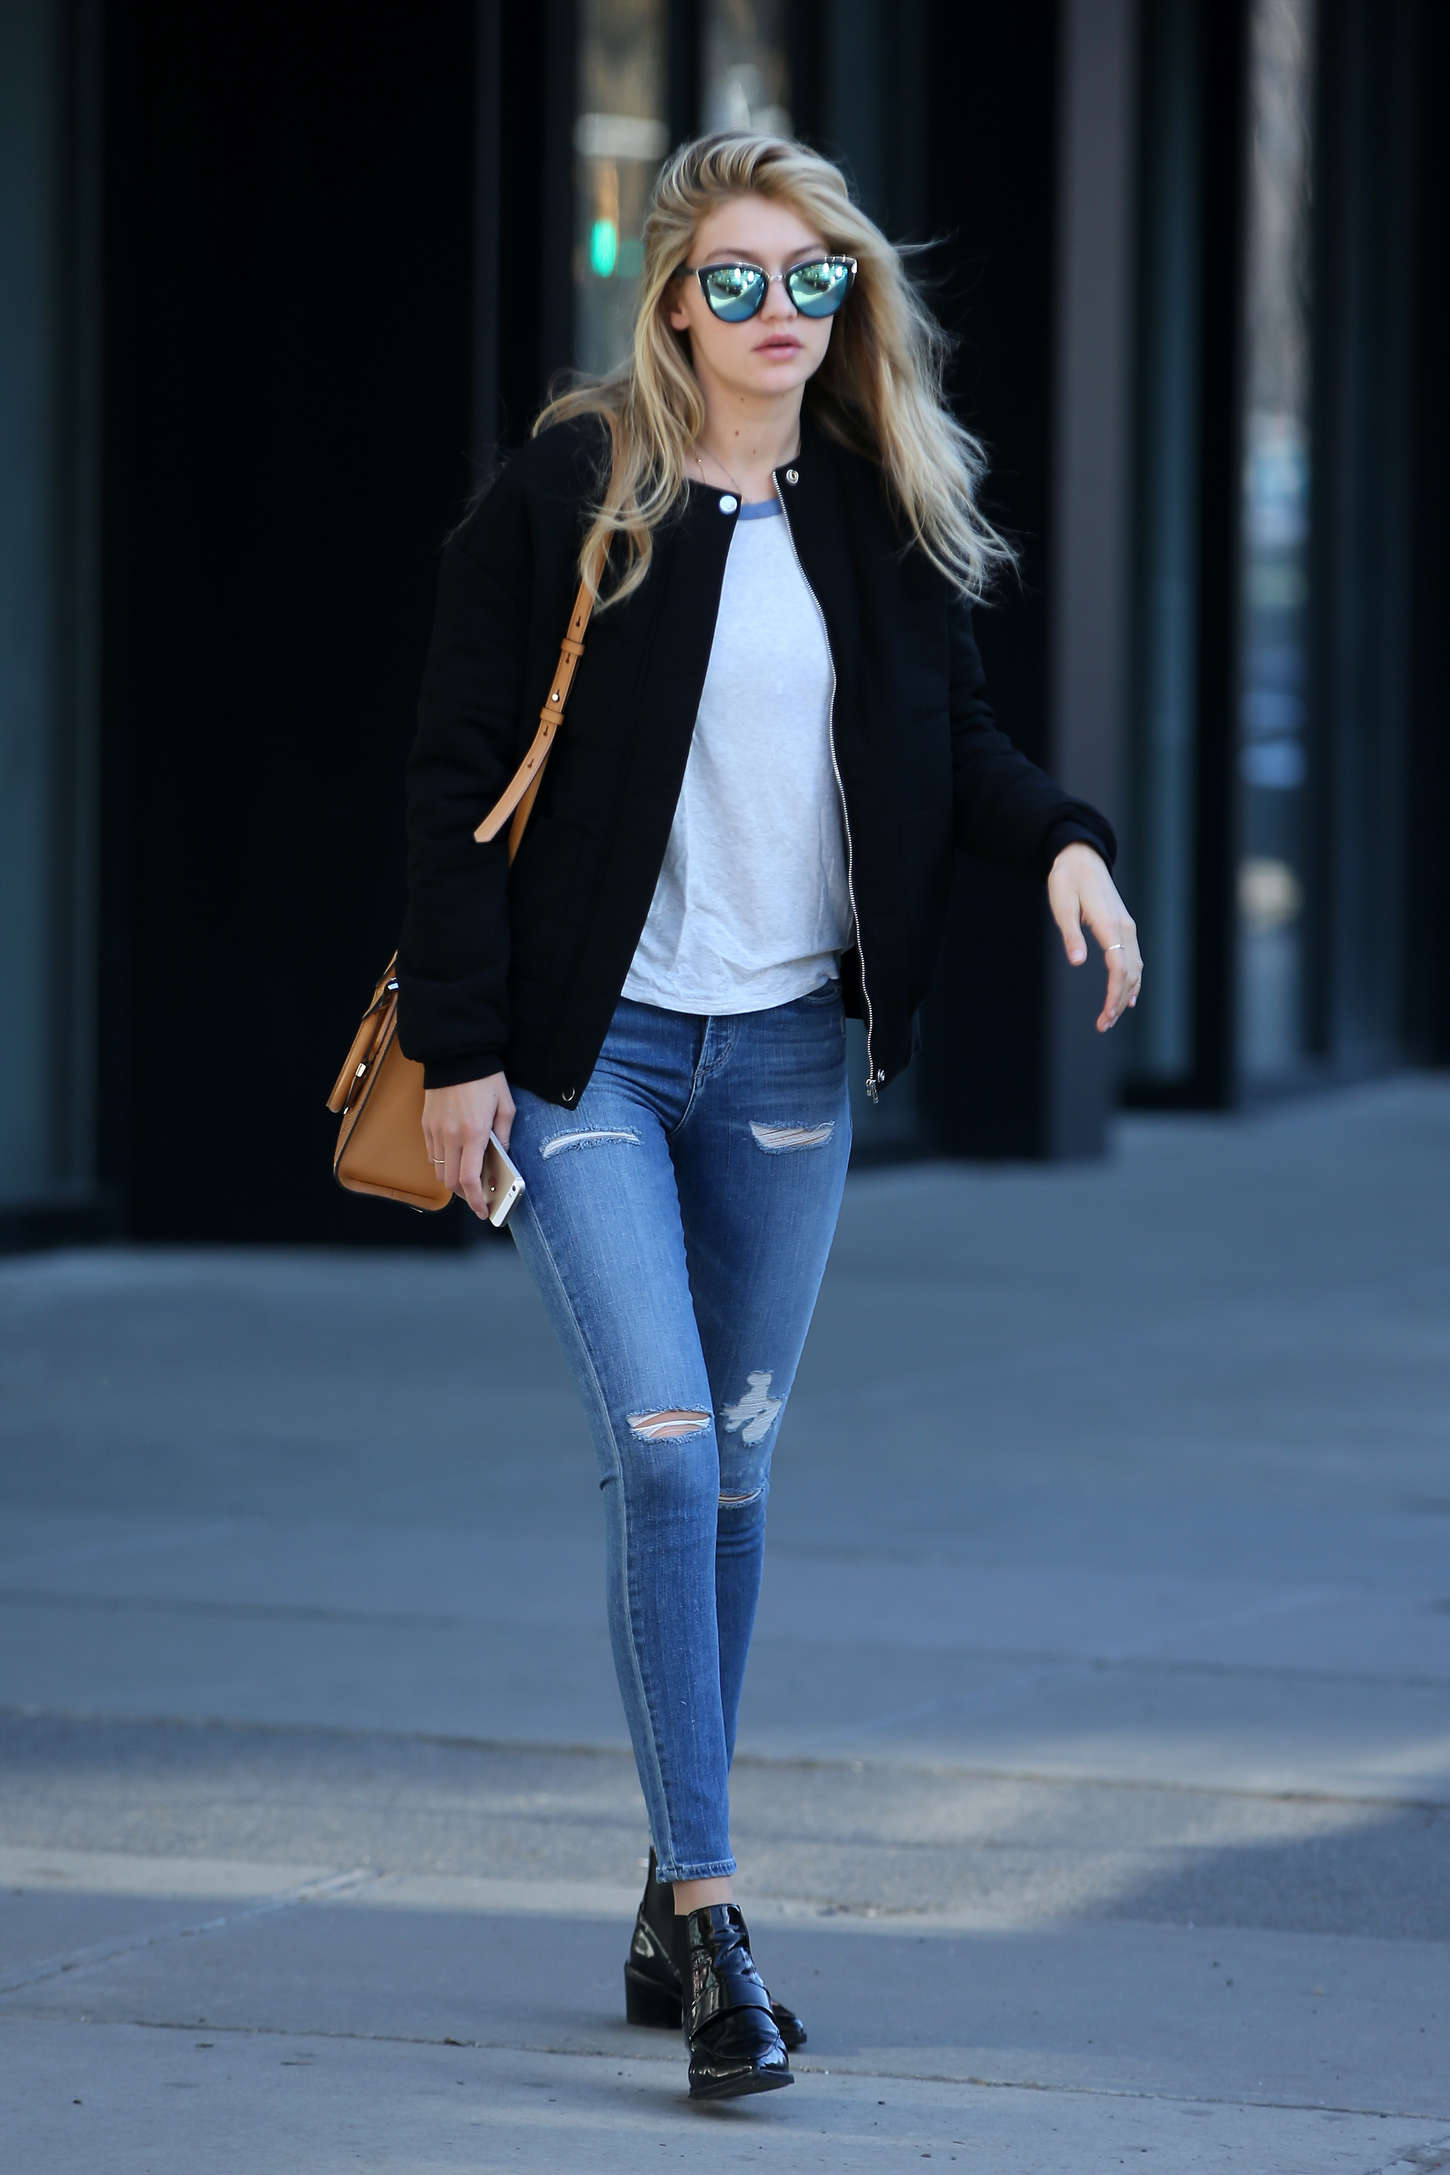 Gigi-Hadid-in-Tight-Jeans--06.jpg